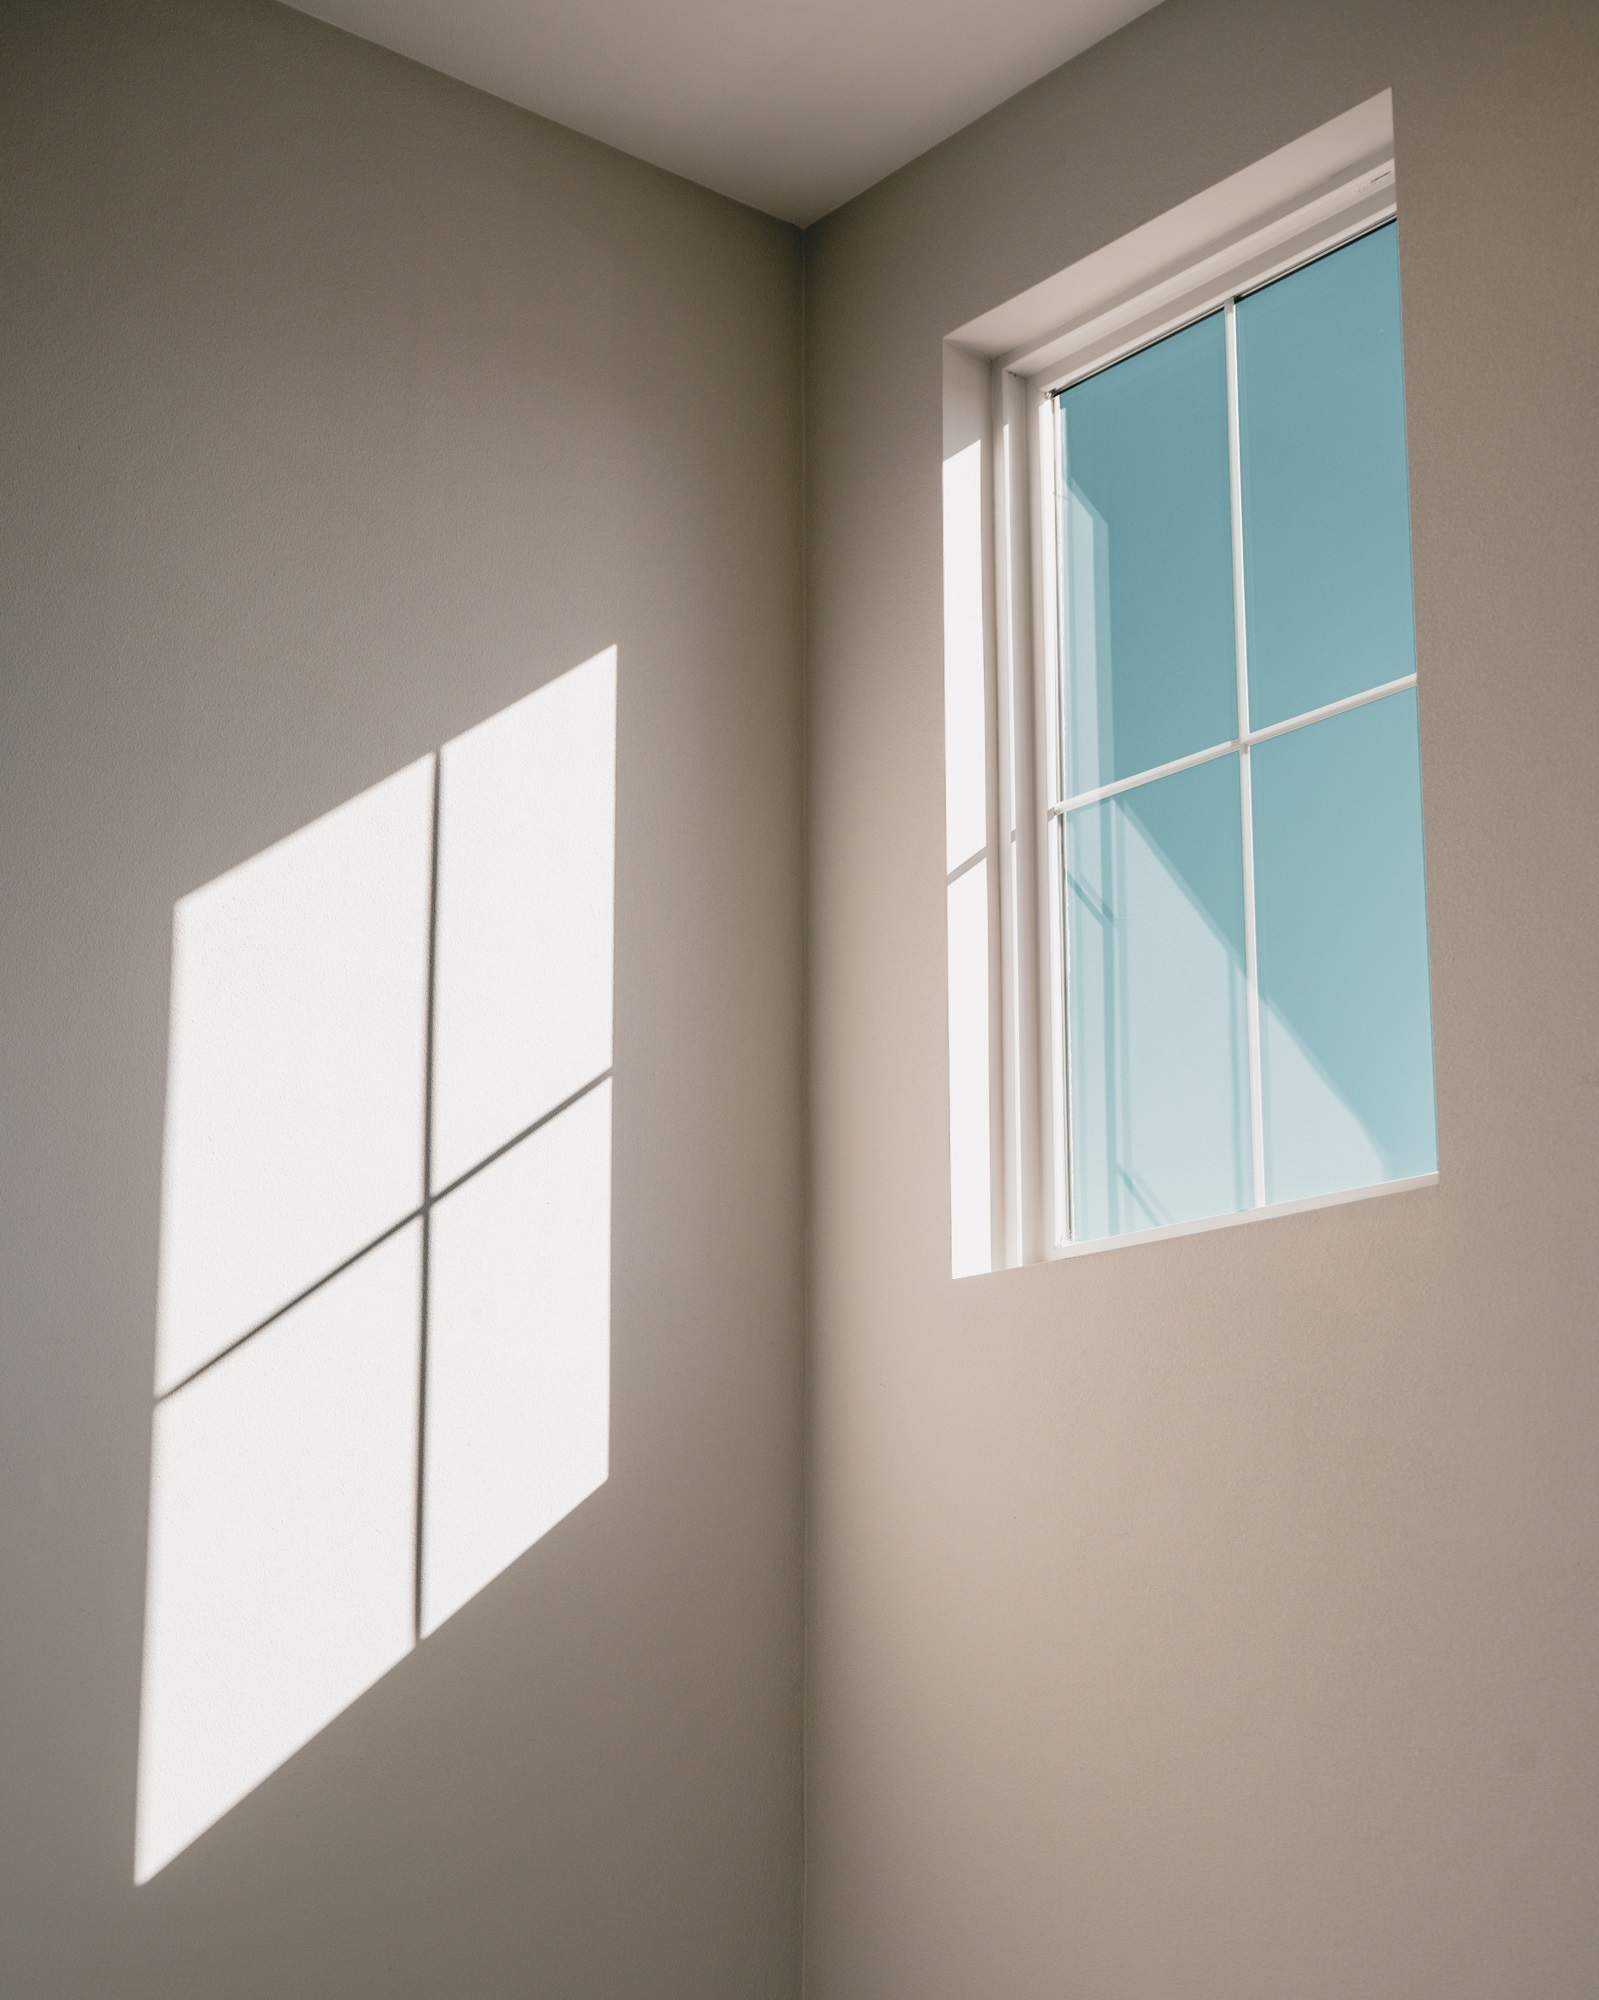 Image of a energy efficient vinyl window